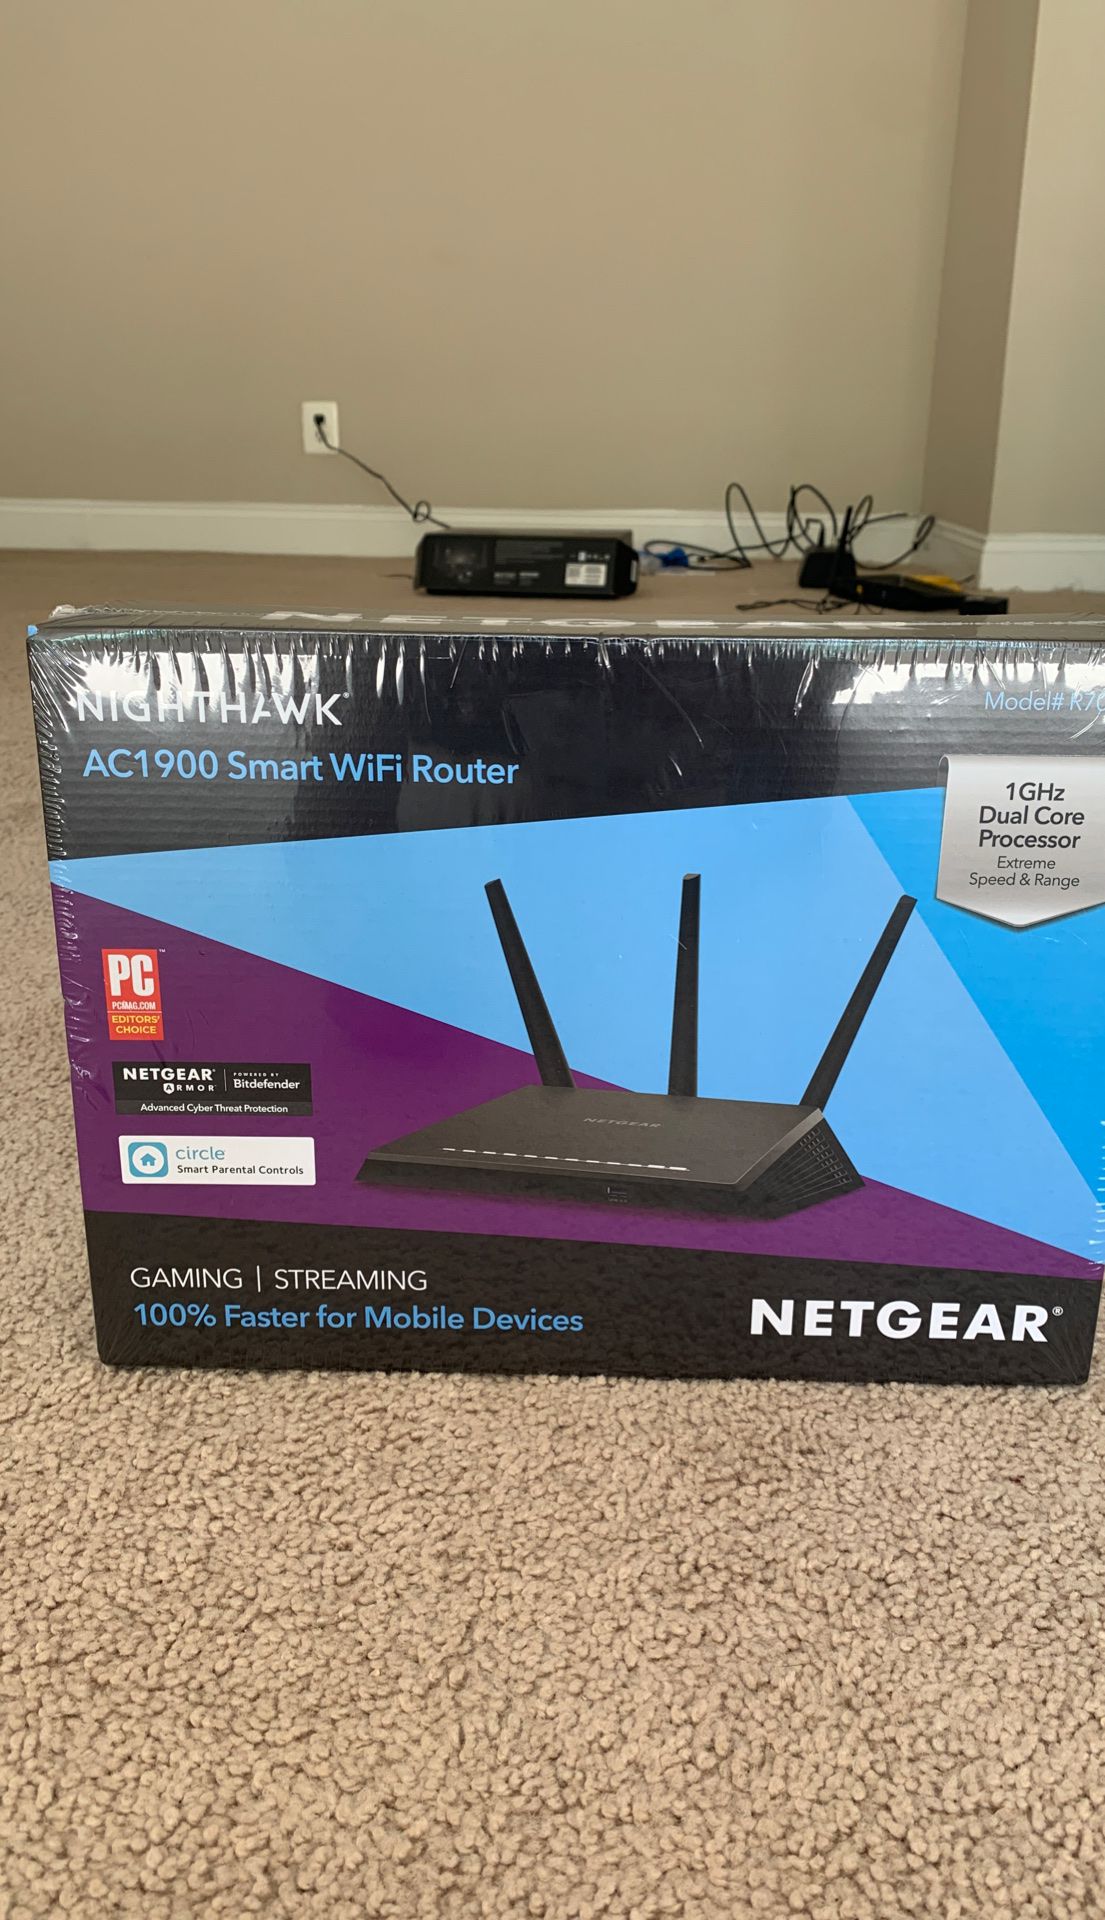 Nighthawk AC1900 Smart Wifi Router